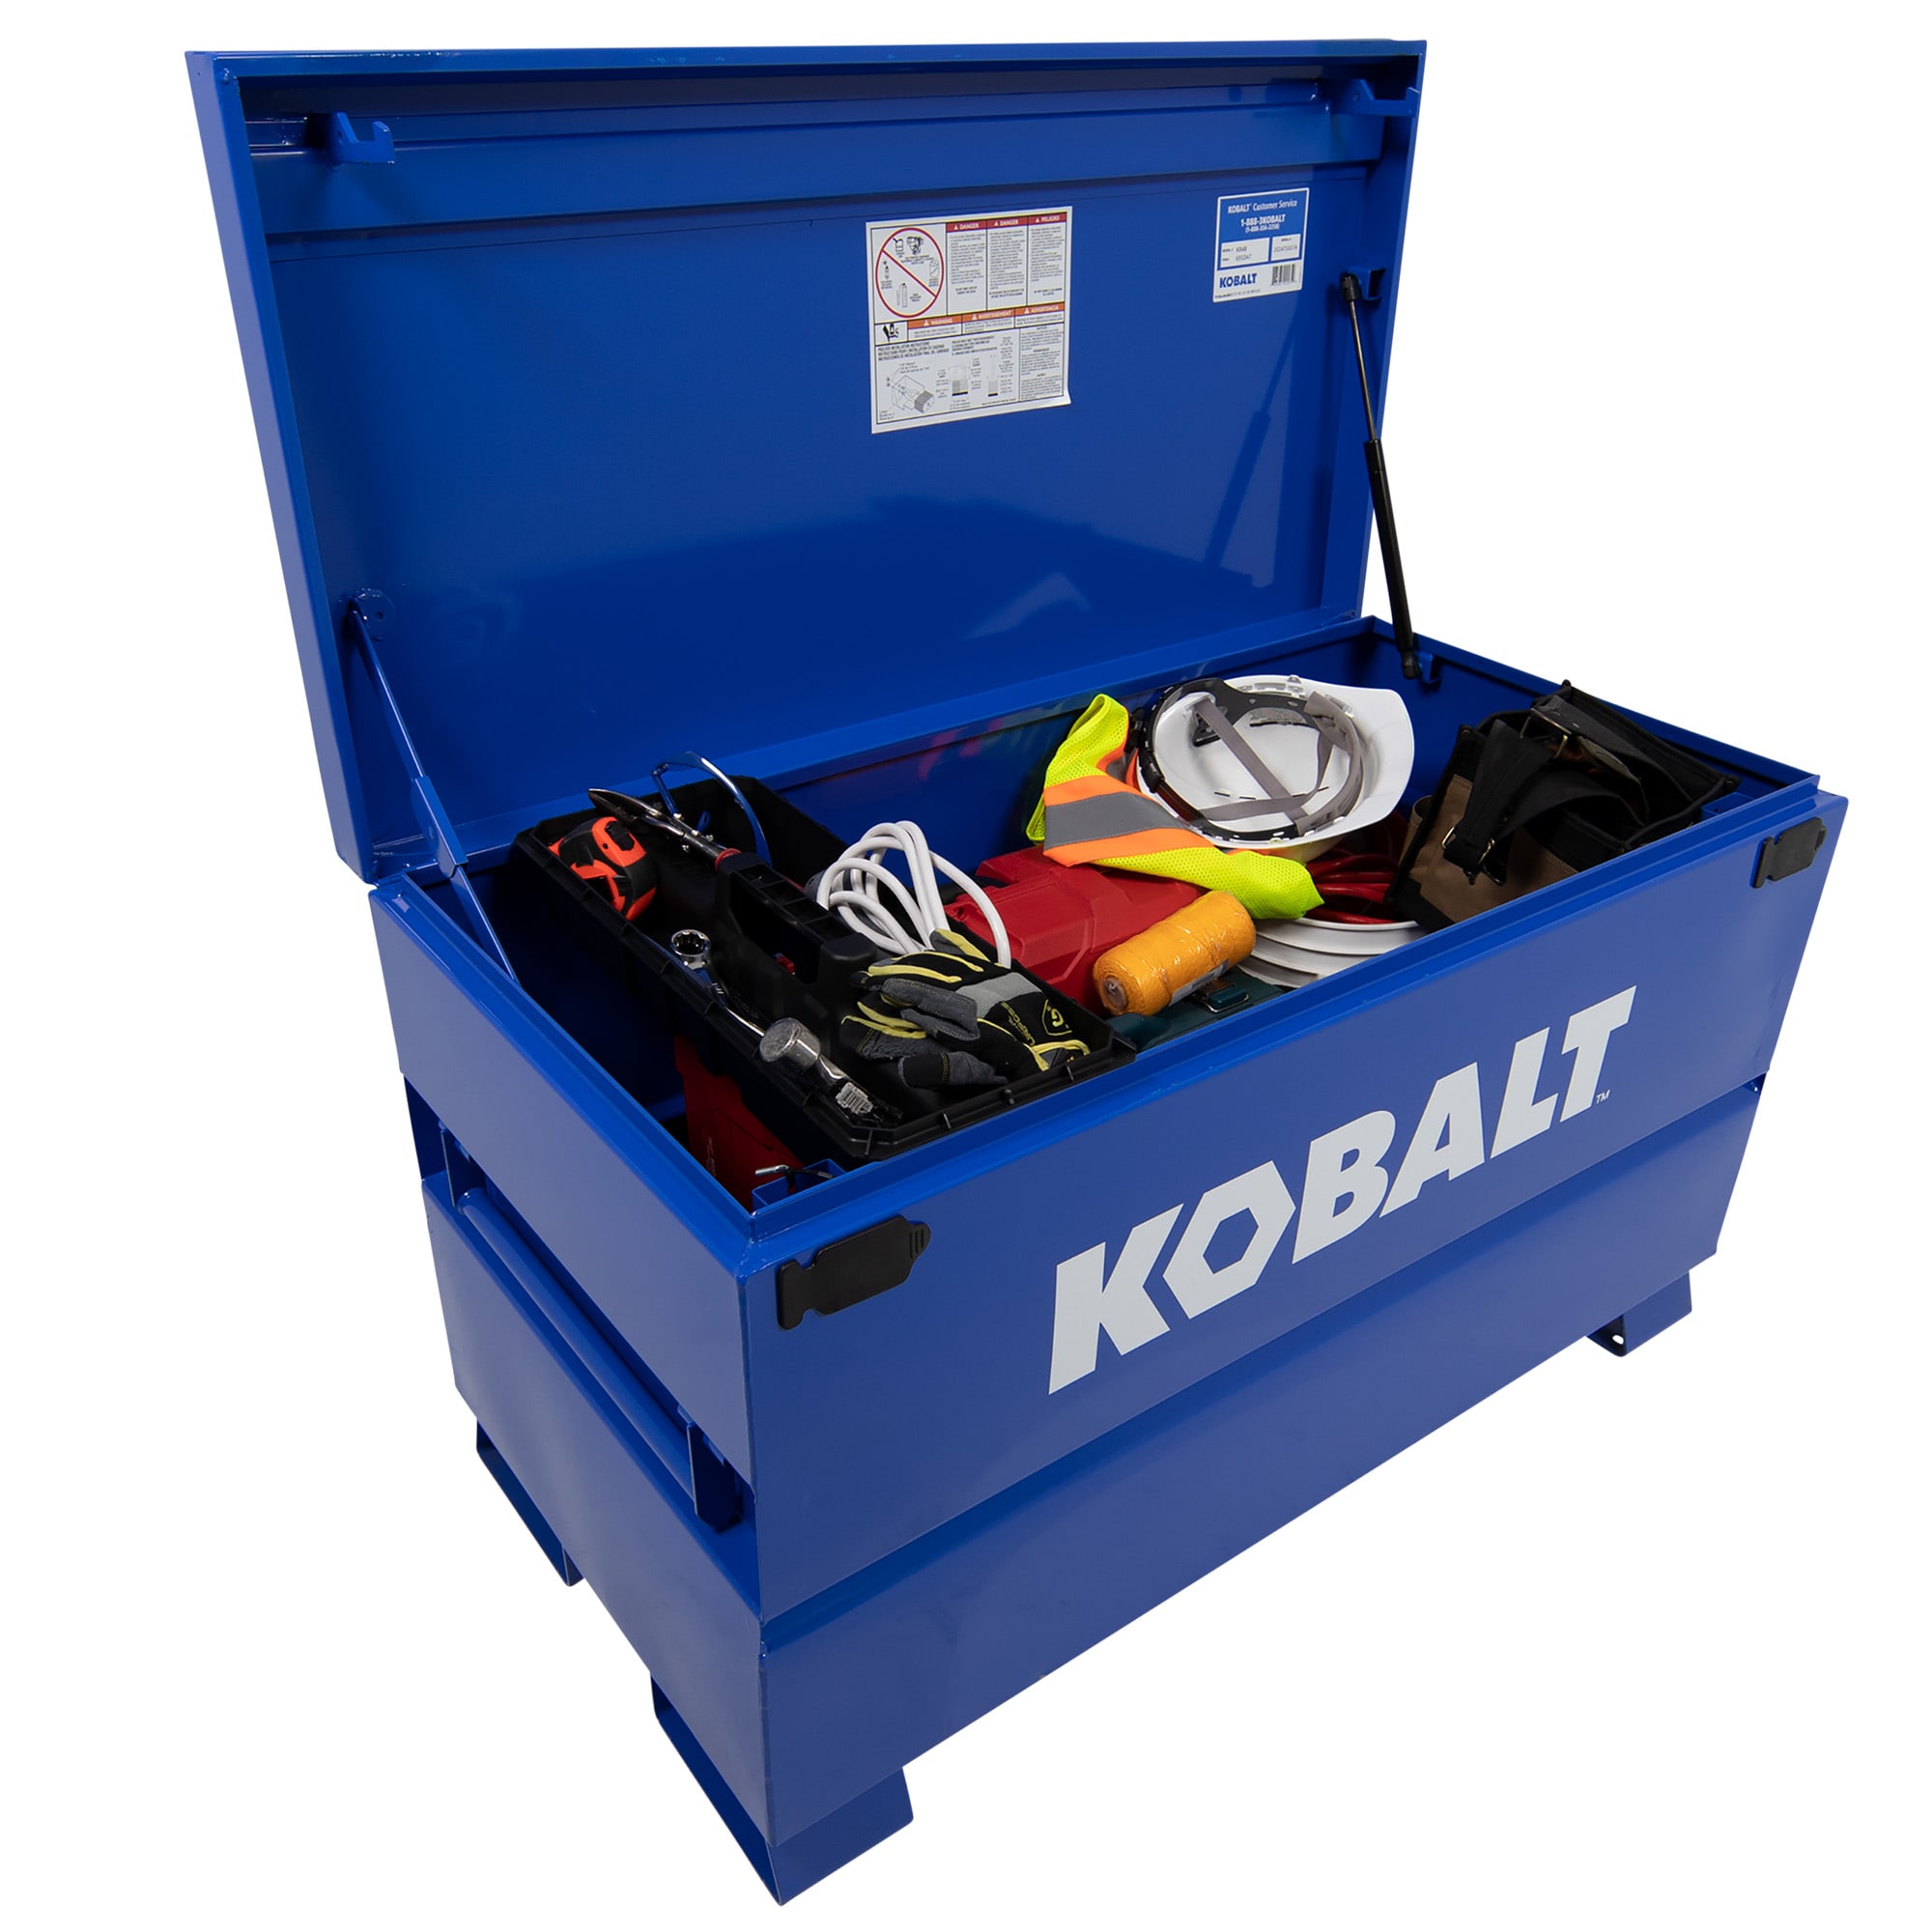 Kobalt 20” Metal Locking Tool Box with Handle - Tool Boxes, Belts & Storage  - New Albany, Ohio, Facebook Marketplace